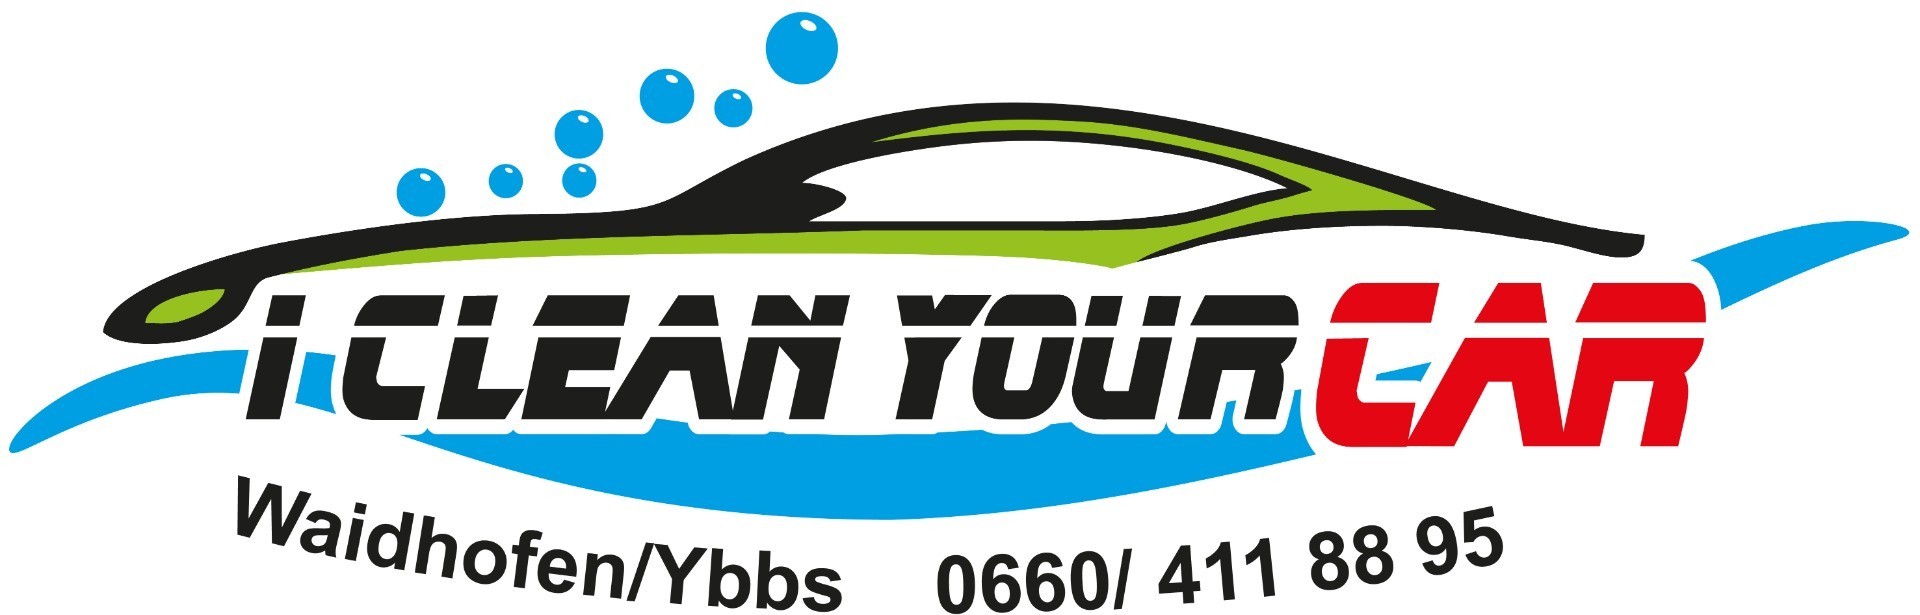 Logo i clean your car